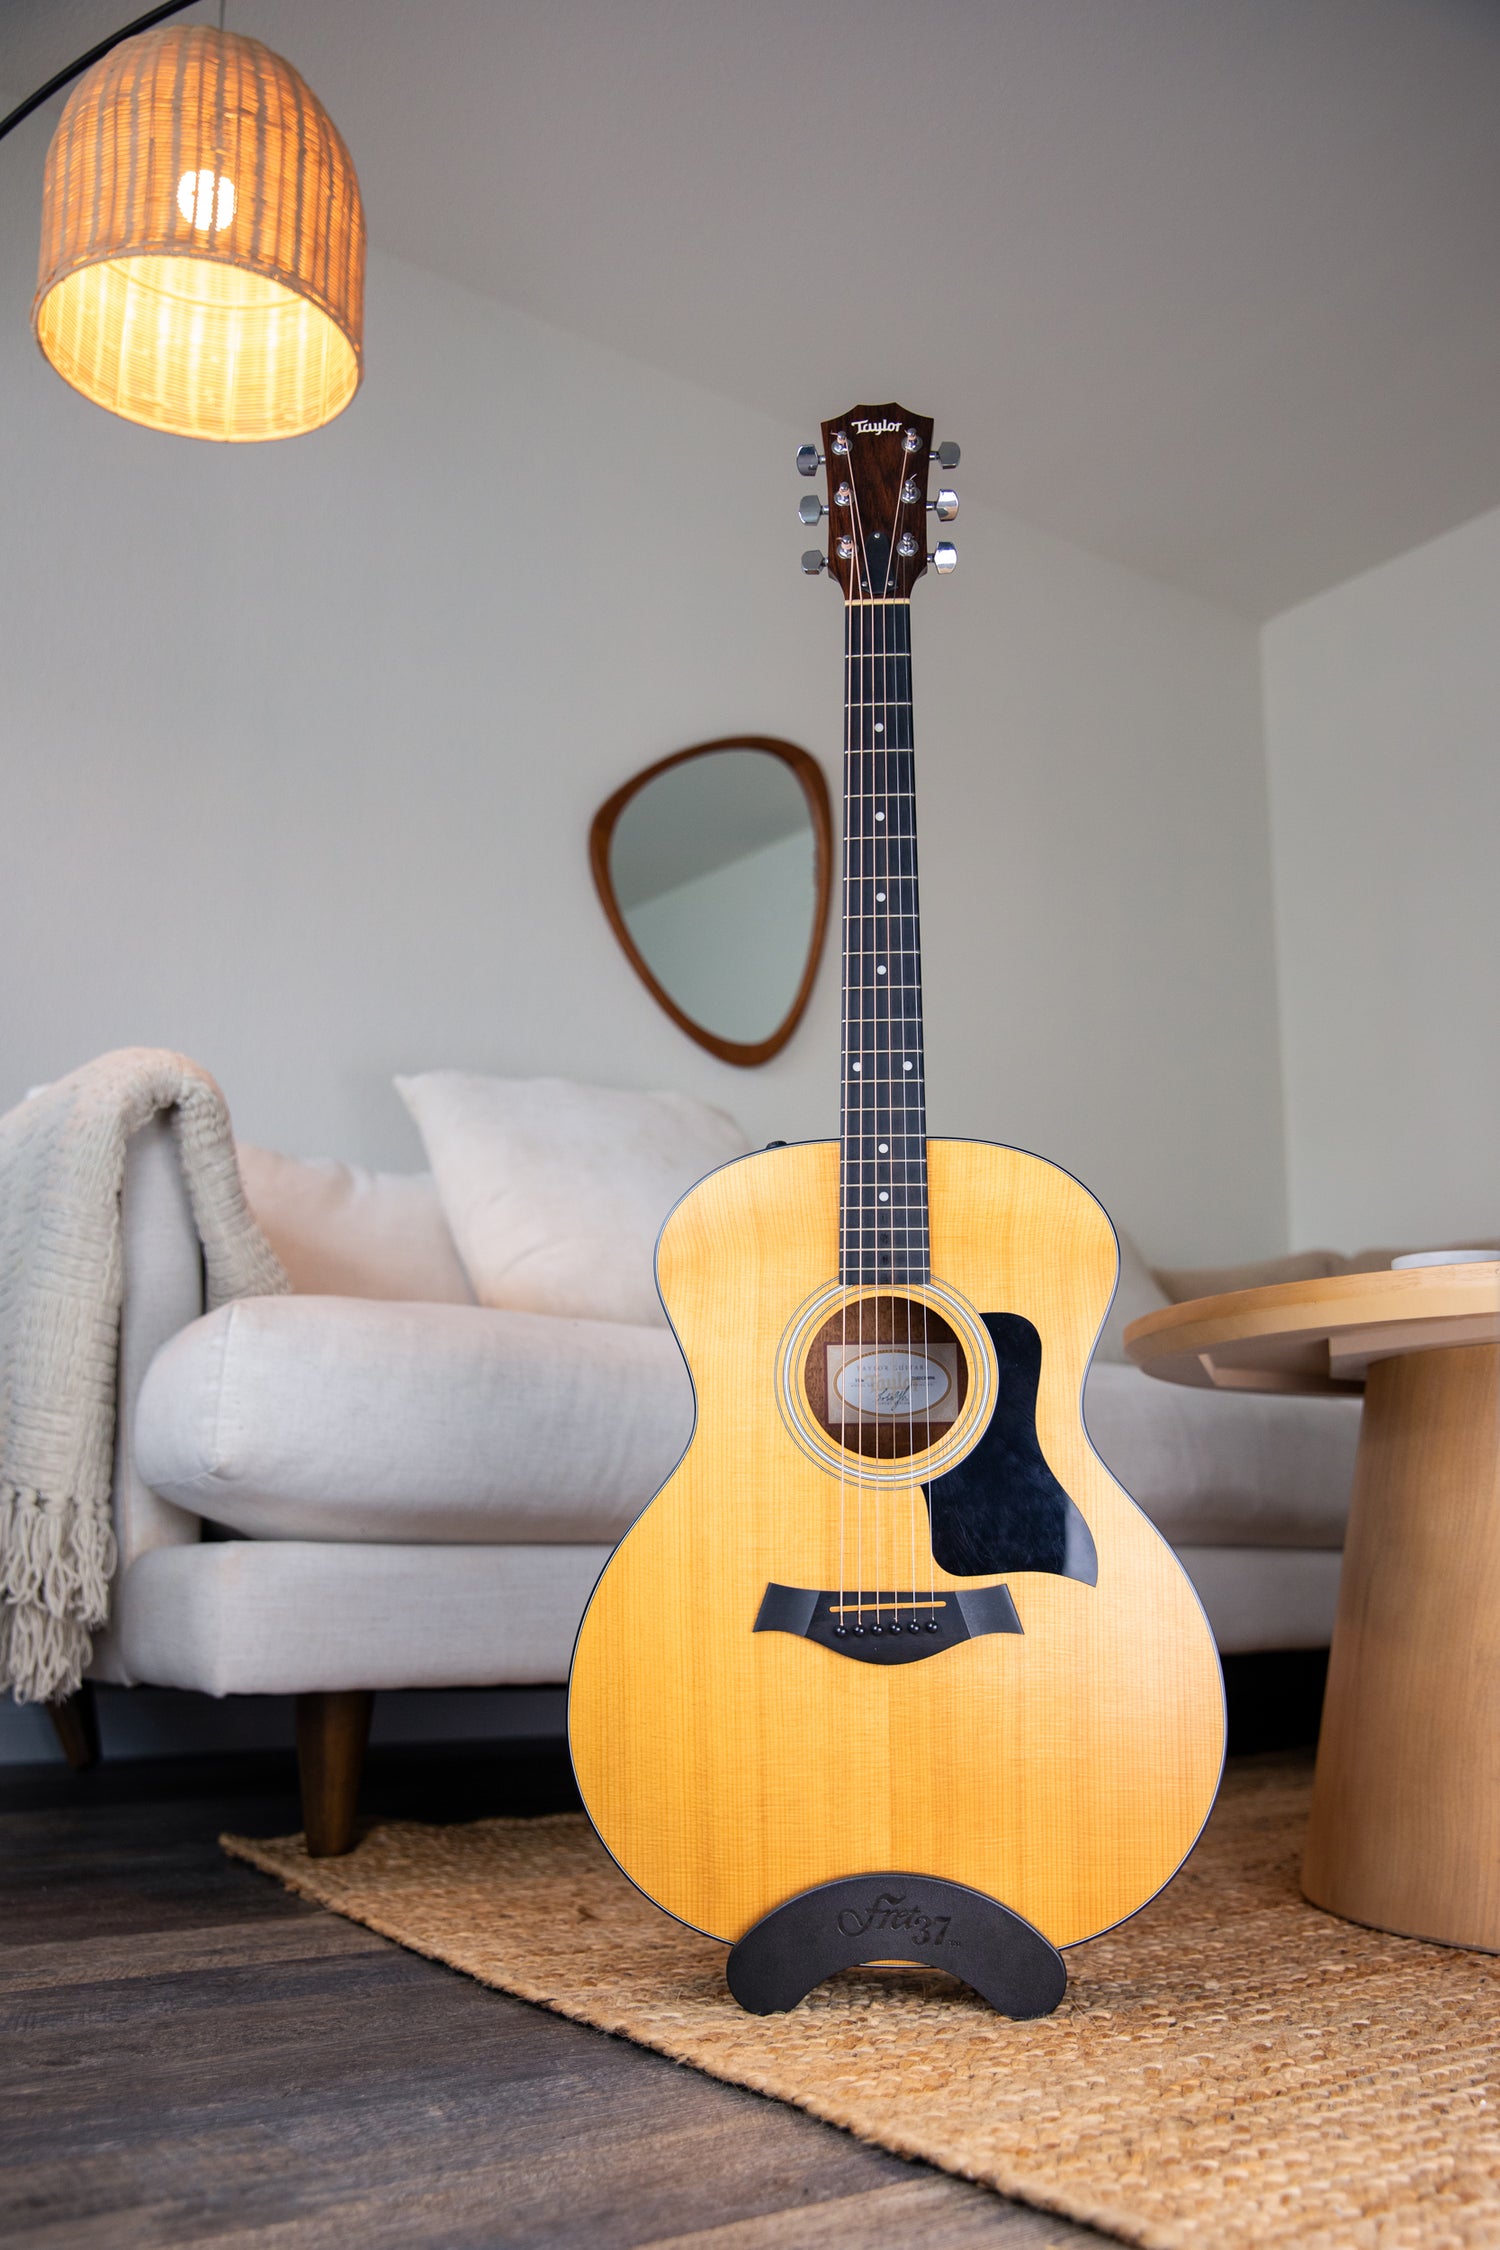 fret37-acoustics1-attachable-acoustic-guitar-stand-room-decor-carpet-couch